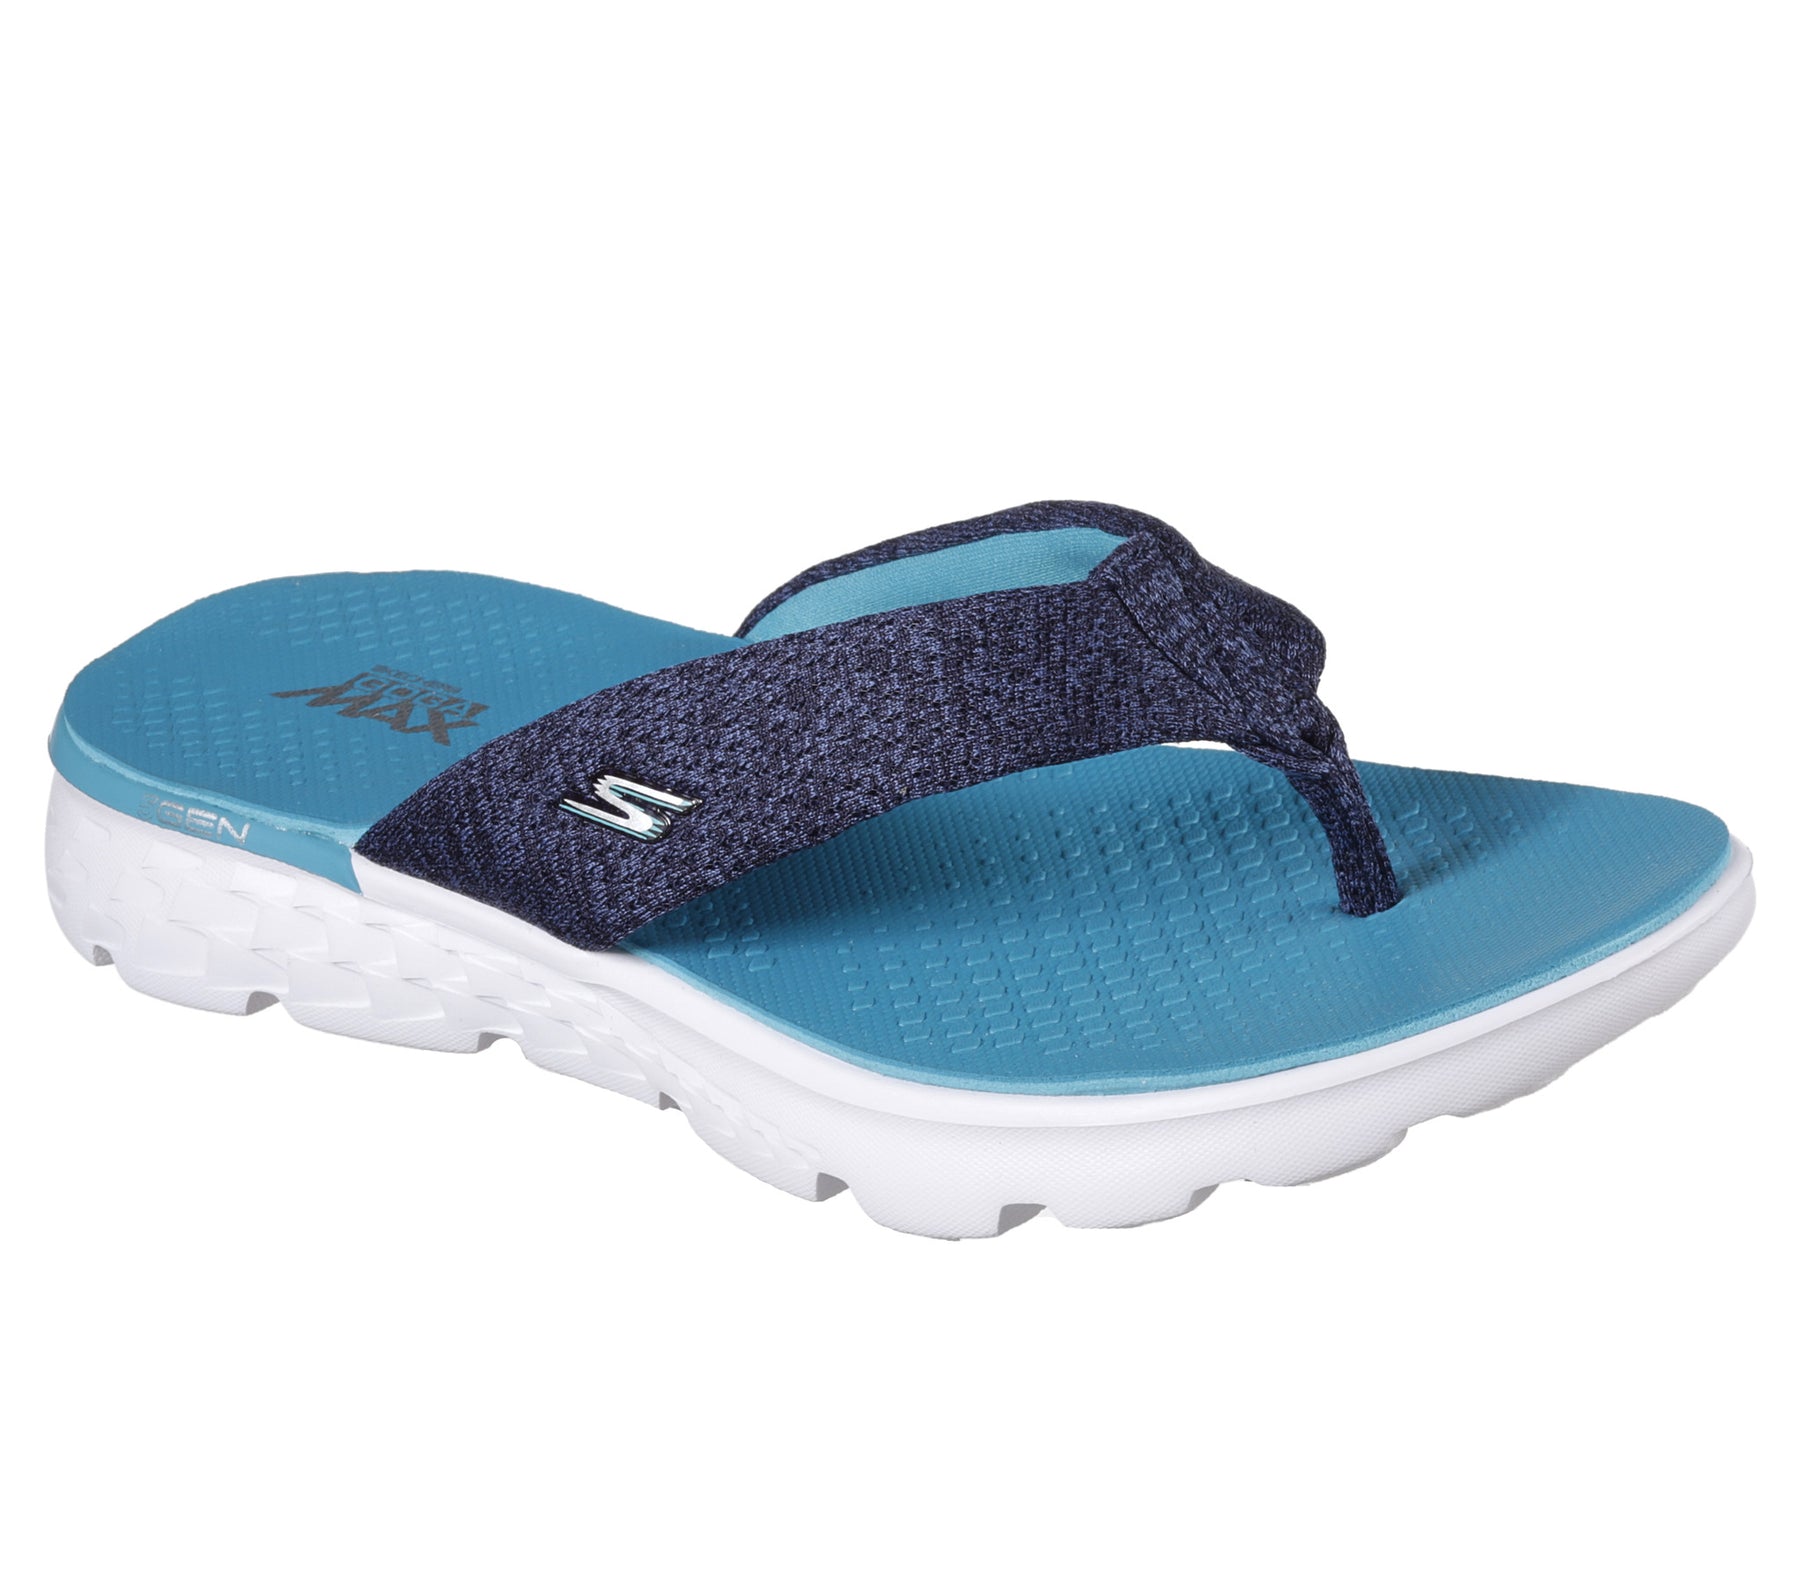 skechers navy blue sandals